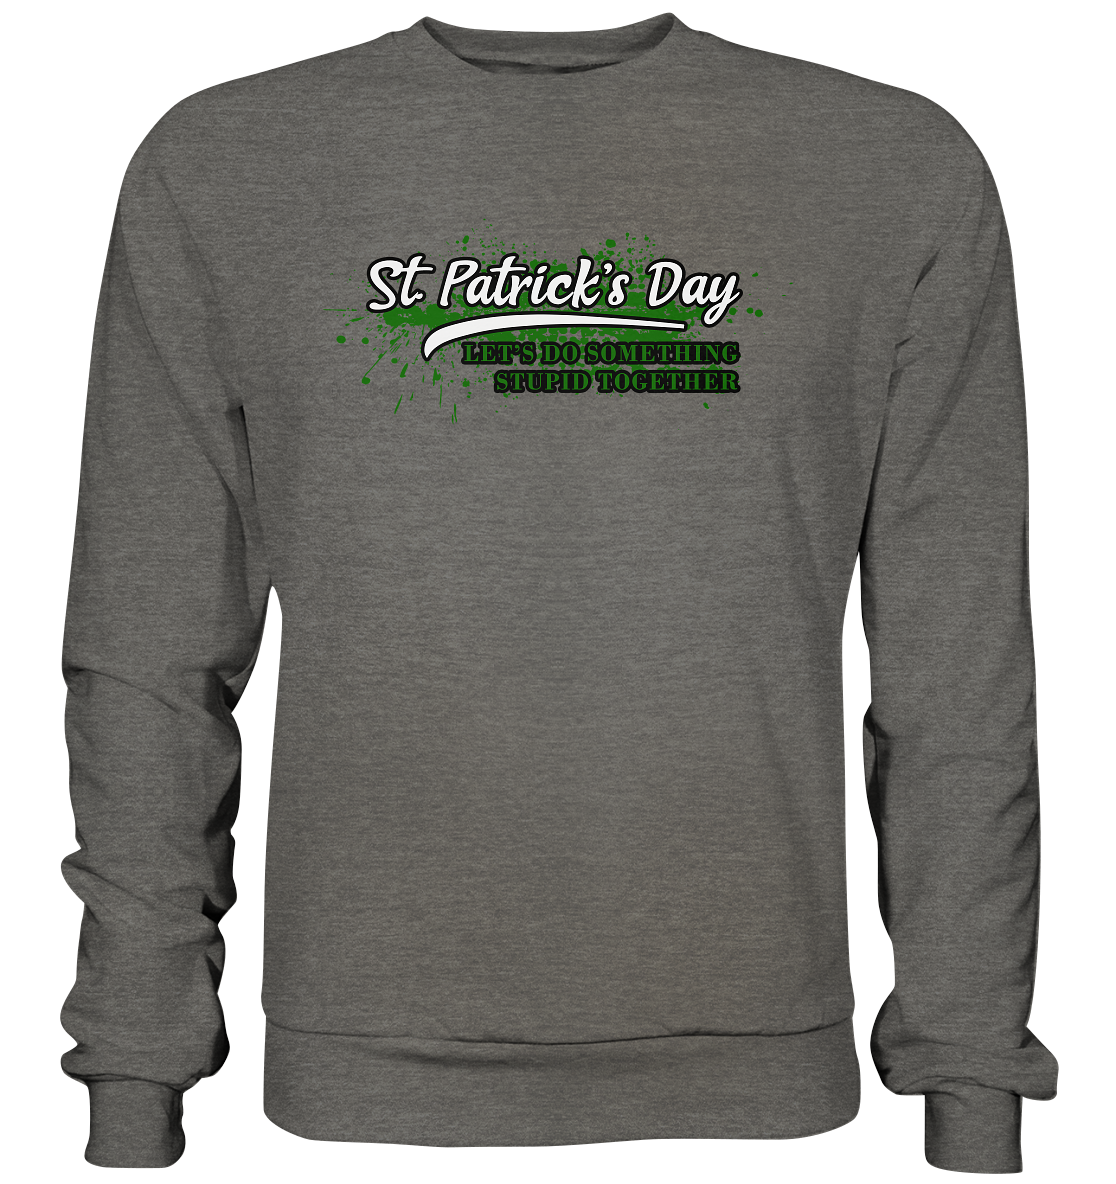 St. Patrick's Day "Let's Do Something Stupid Together" - Basic Sweatshirt